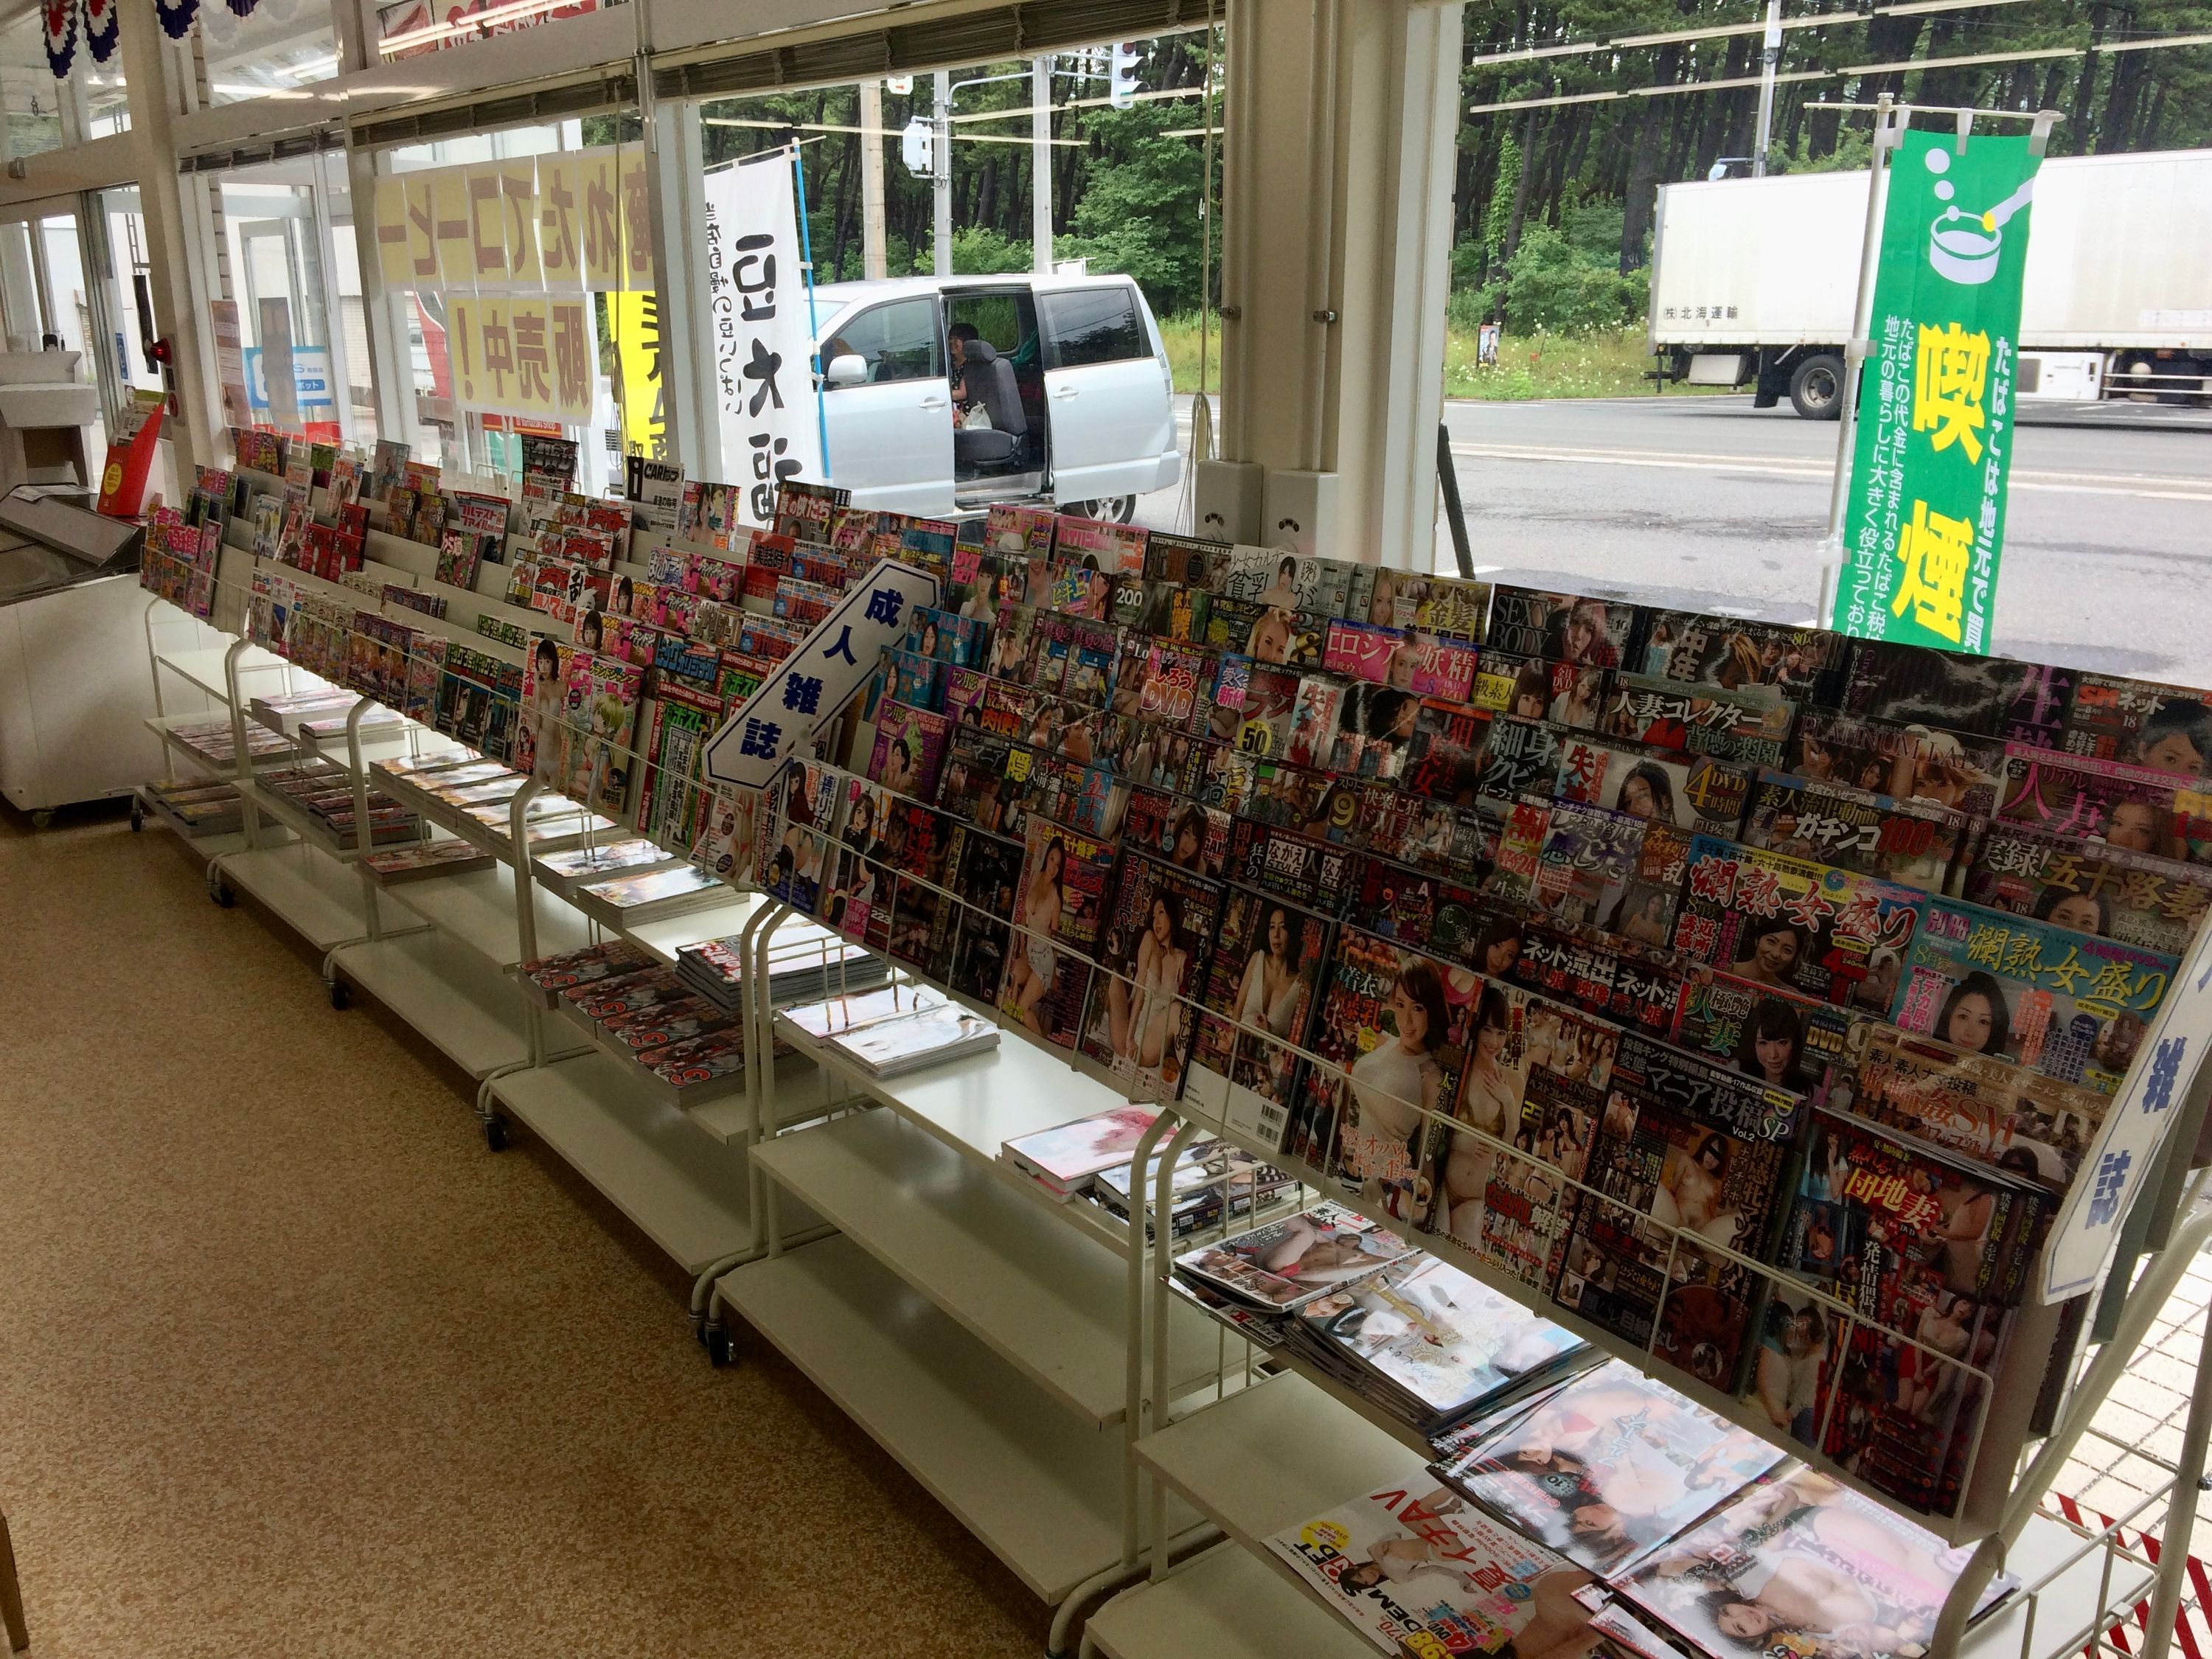 Dozens of pornographic magazines for sale in a convenience store.